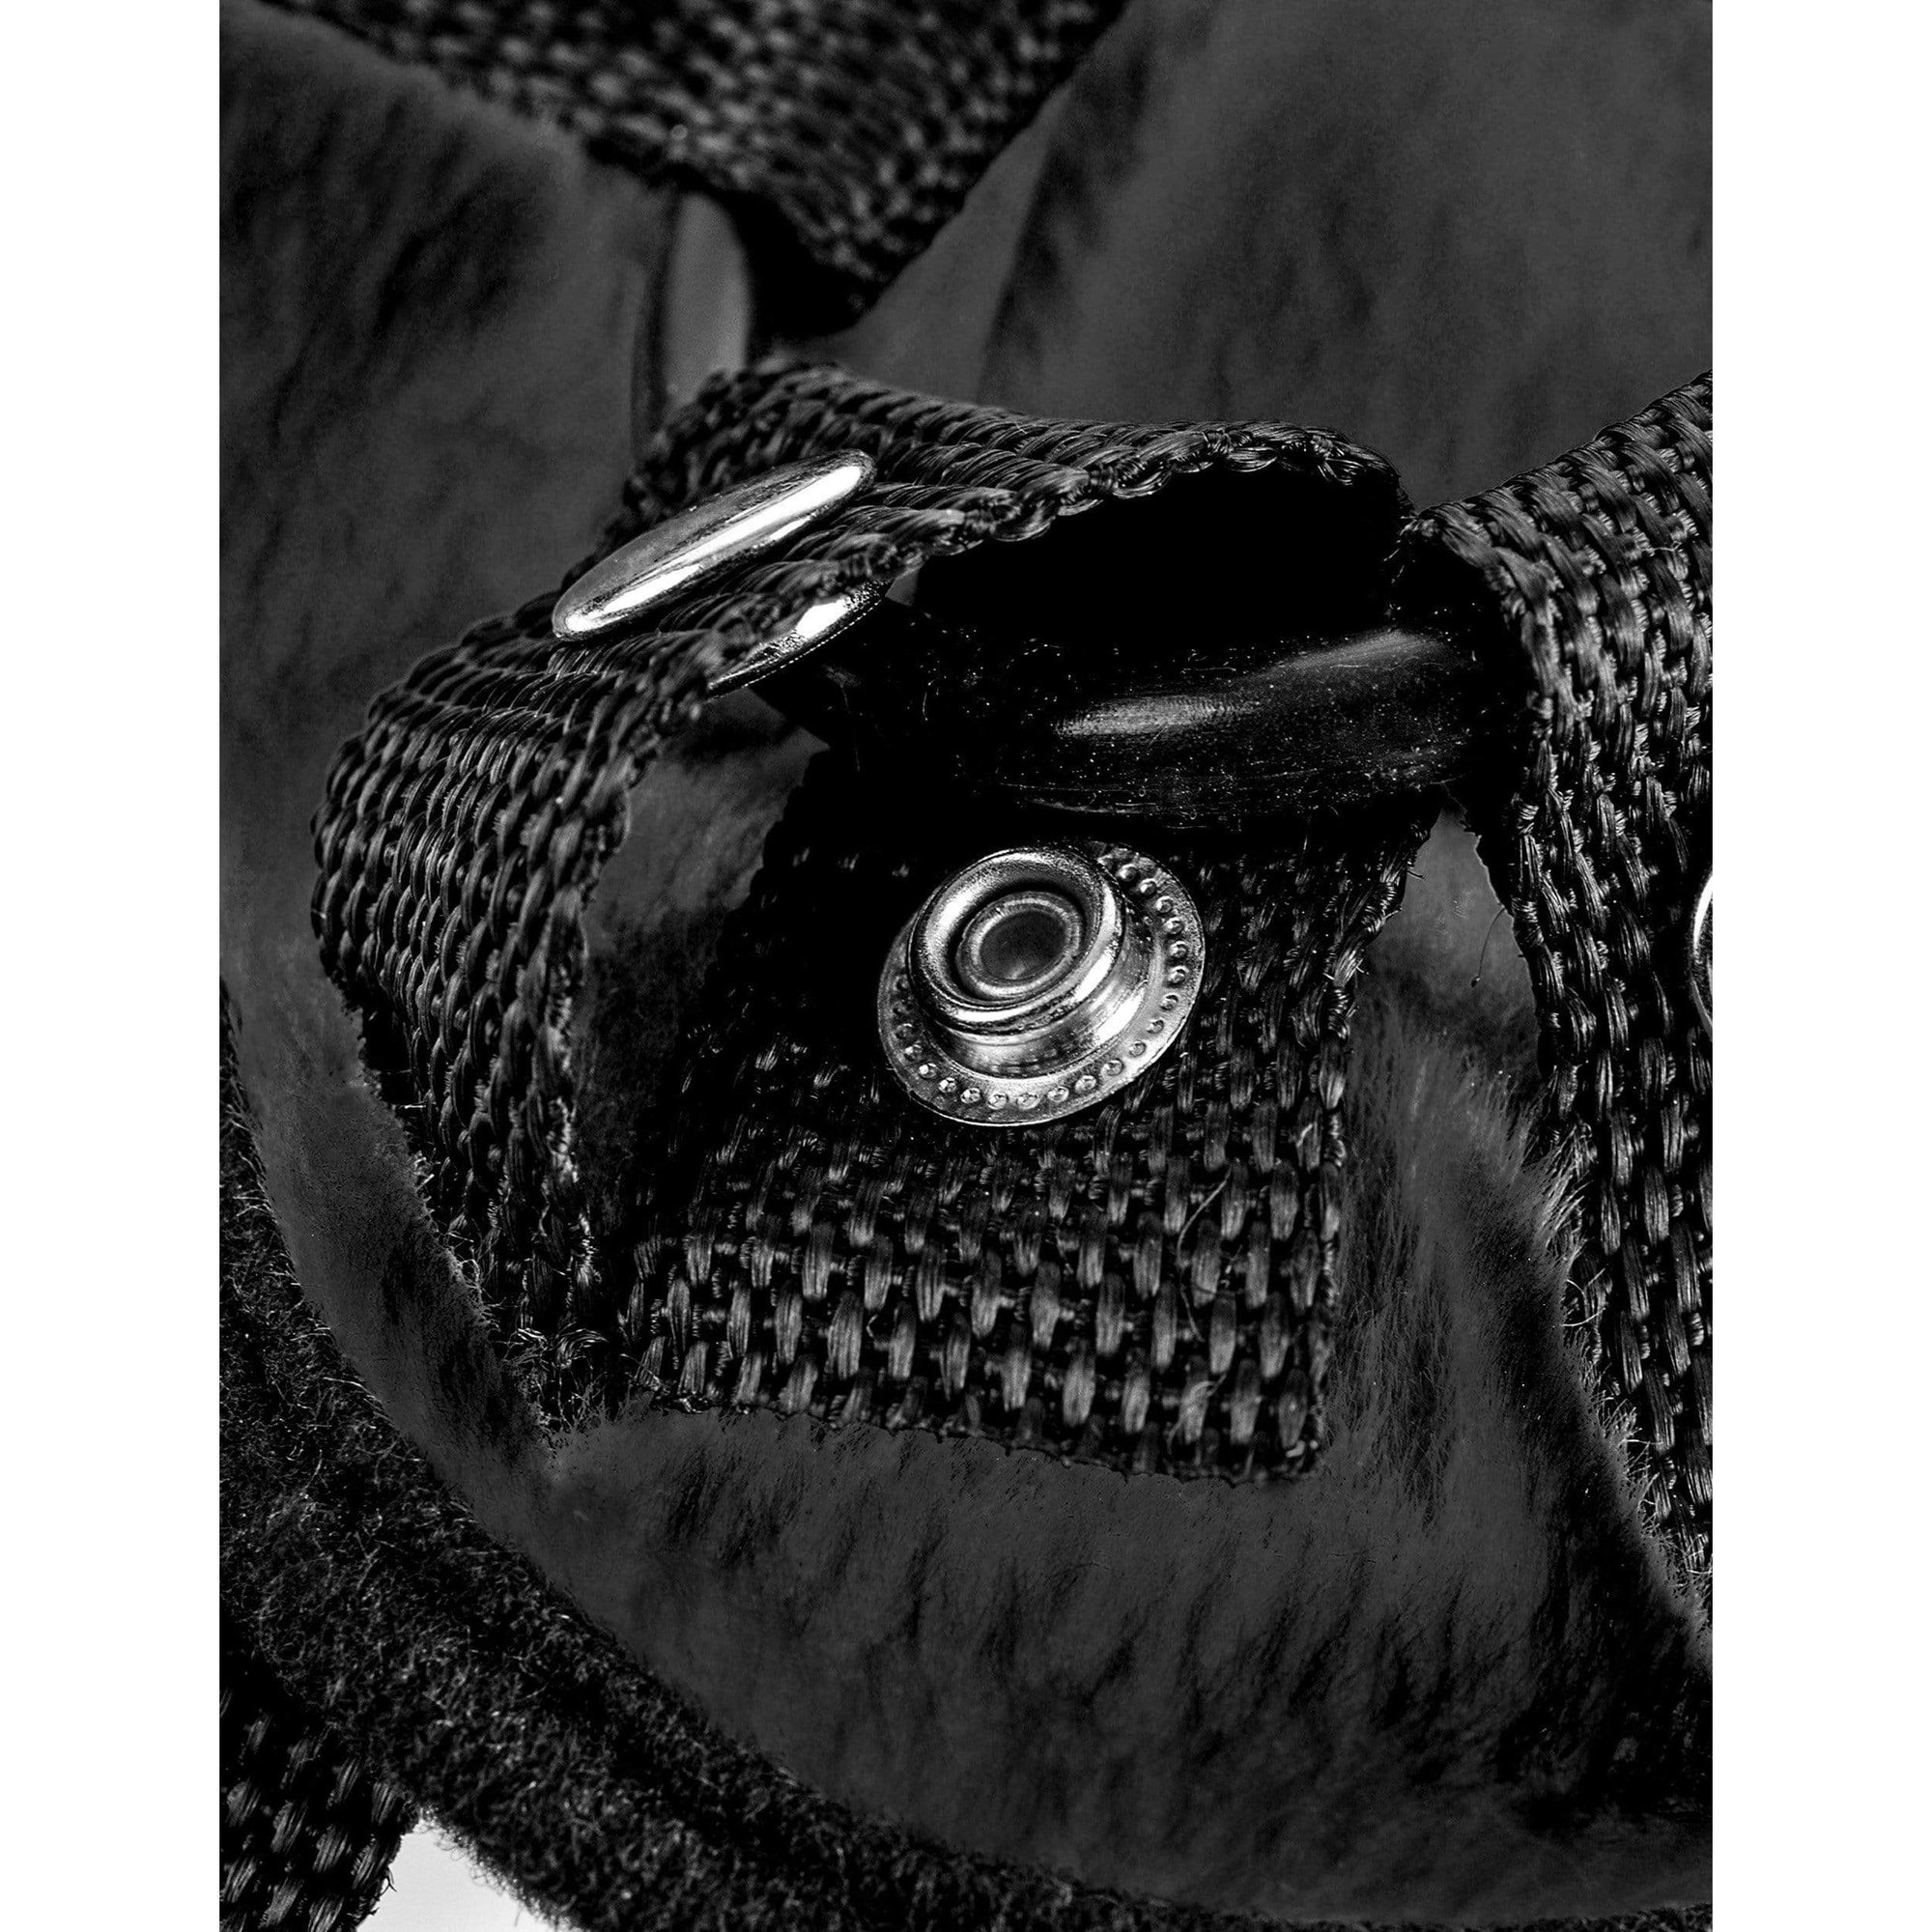 Pipedream - Fetish Fantasy Series Vibrating Plush Harness (Black) Strap On w/o Dildo 324170622 CherryAffairs